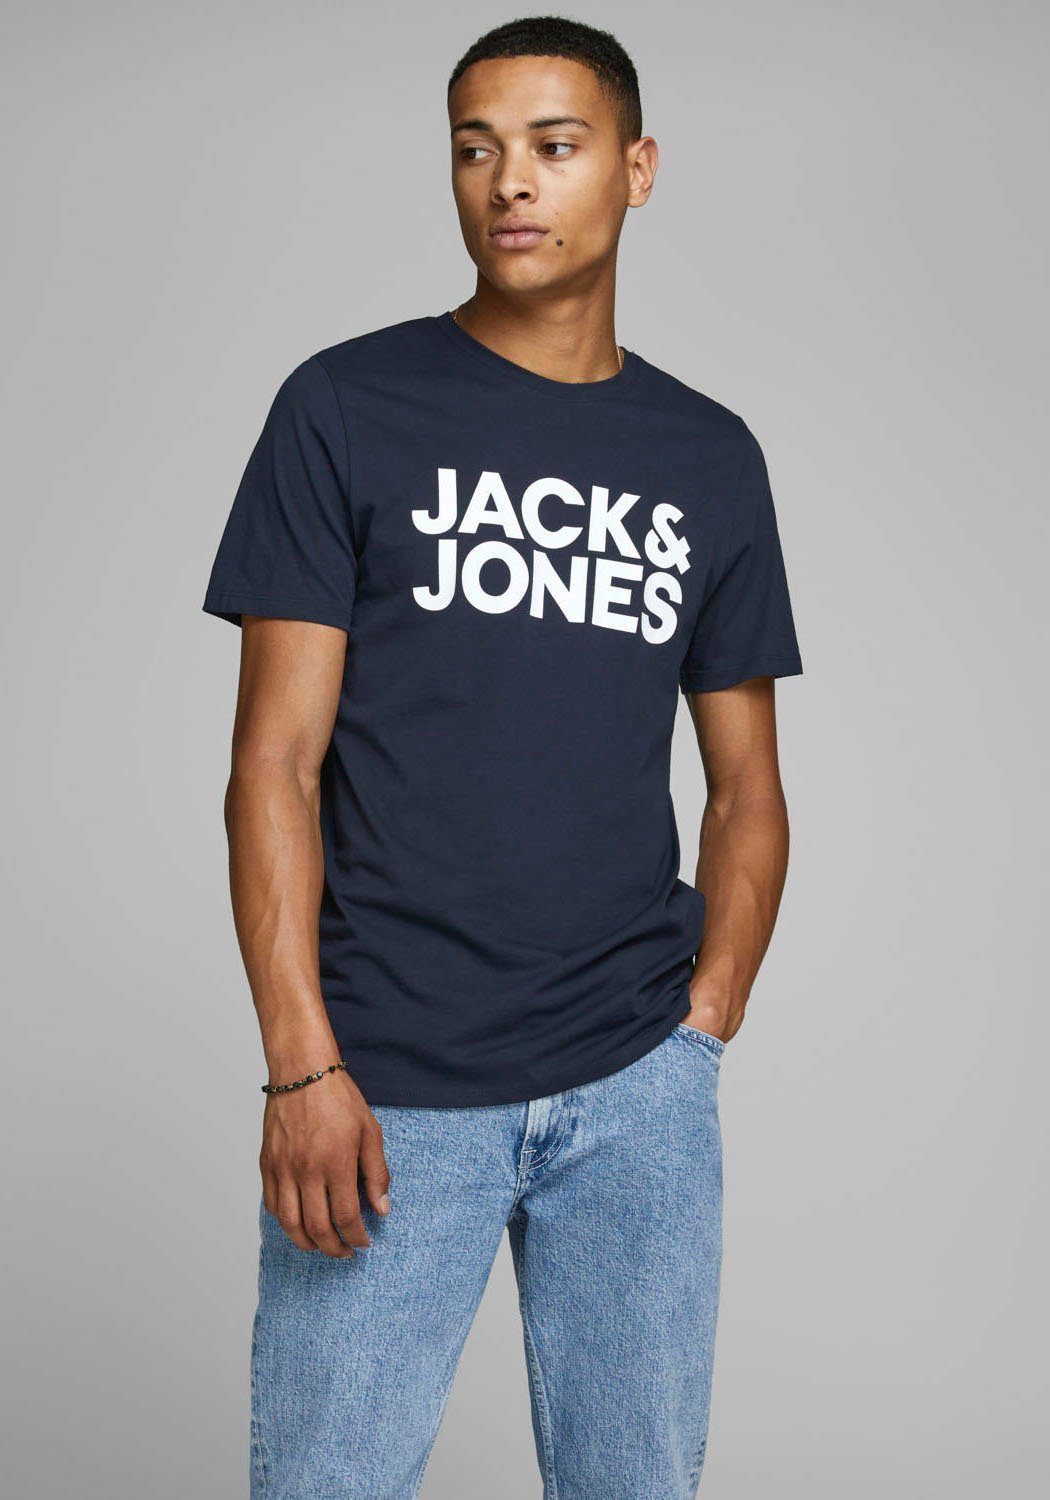 TEE T-Shirt CORP navy mit LOGO Jones & Logoprint Jack